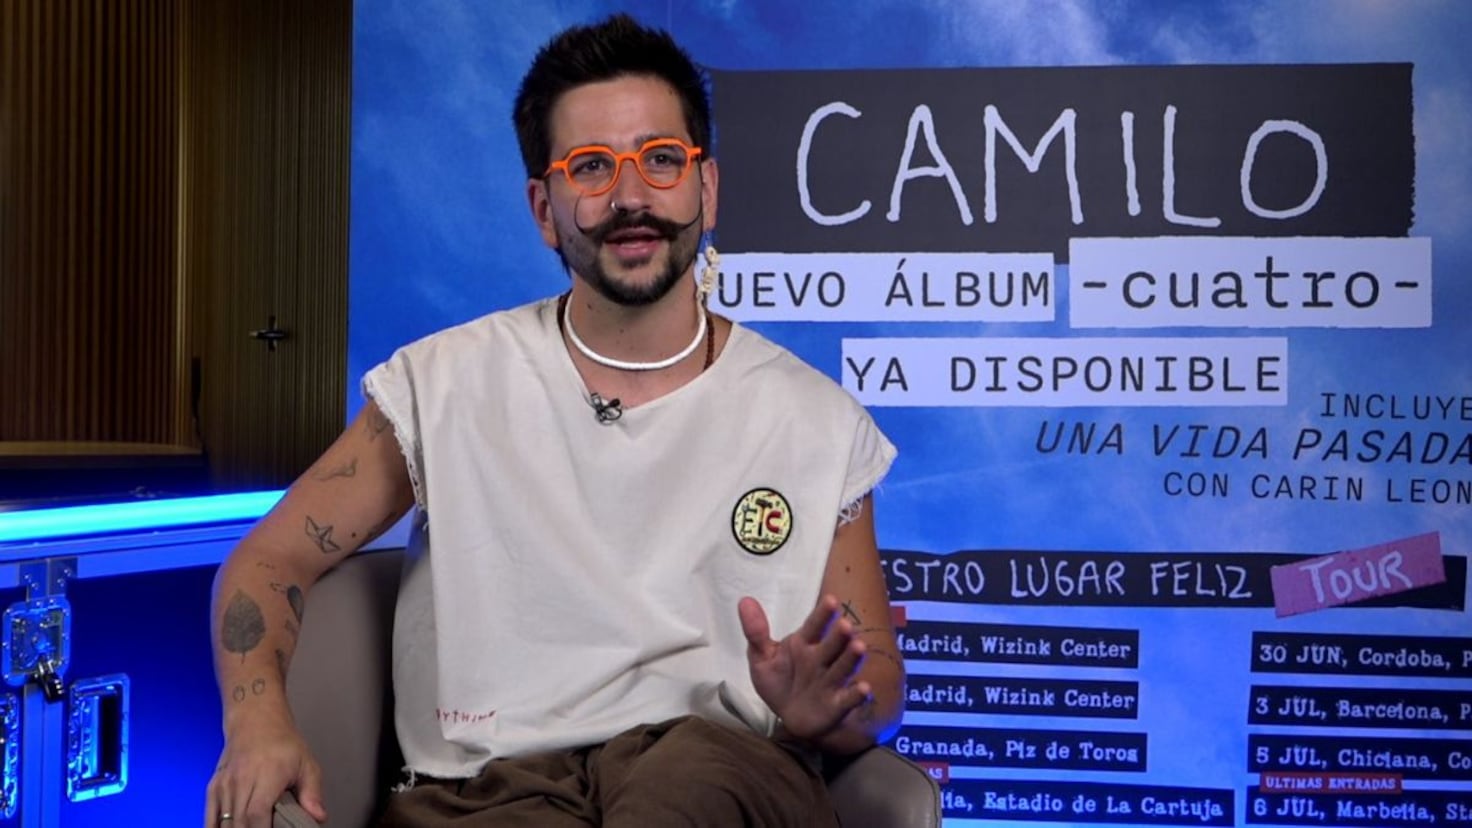 Camilo: Creativity is my spirit expressing itself
